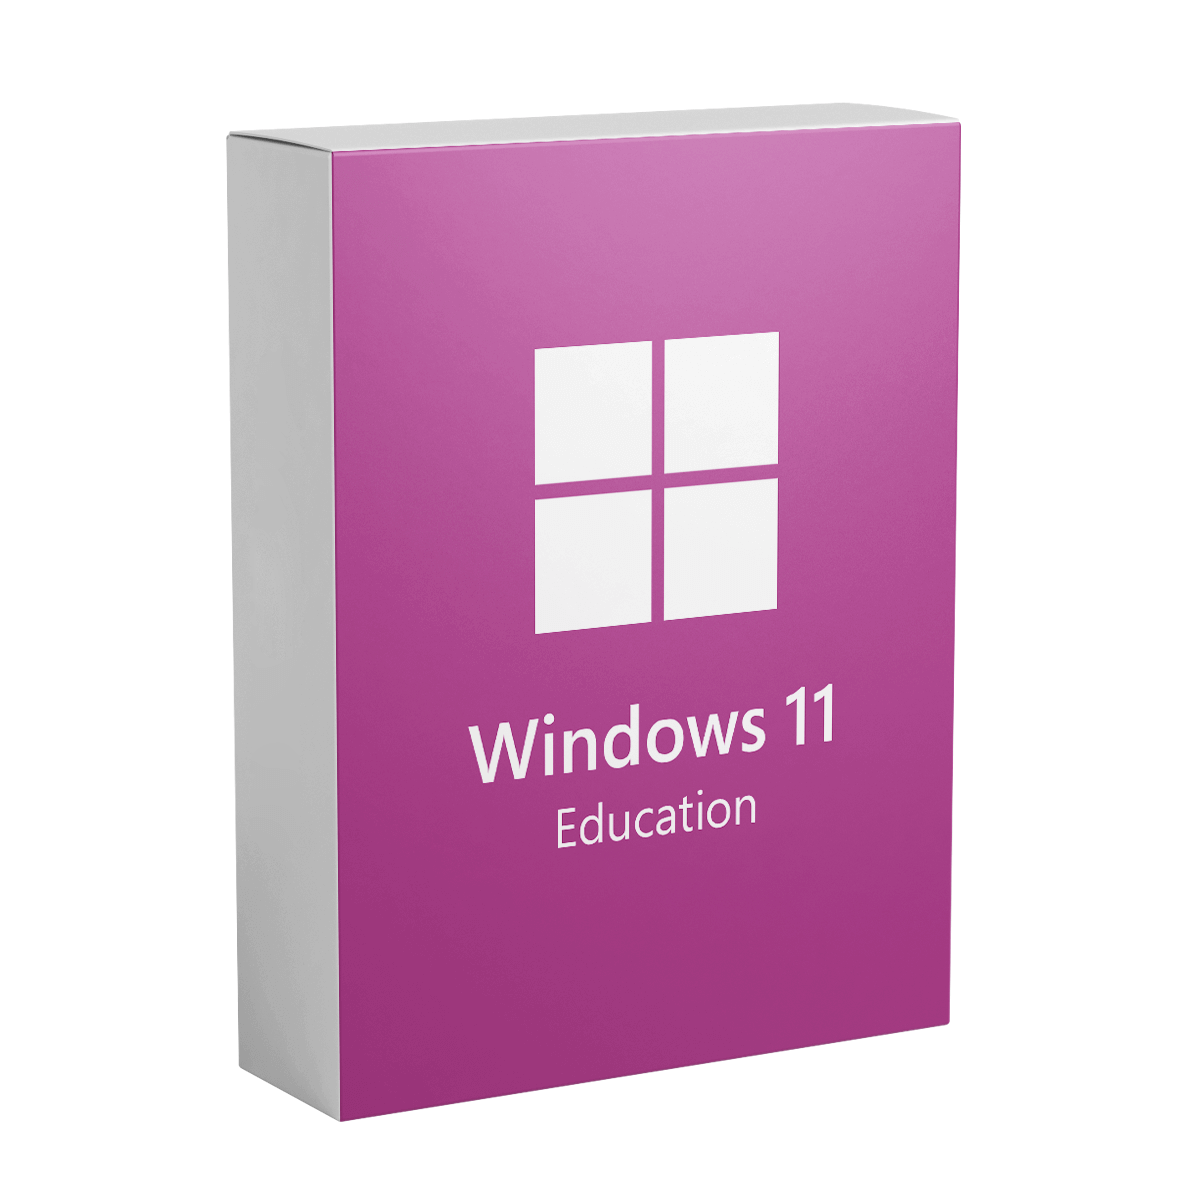 Windows 11 Education - Lifetime License for 1 PC